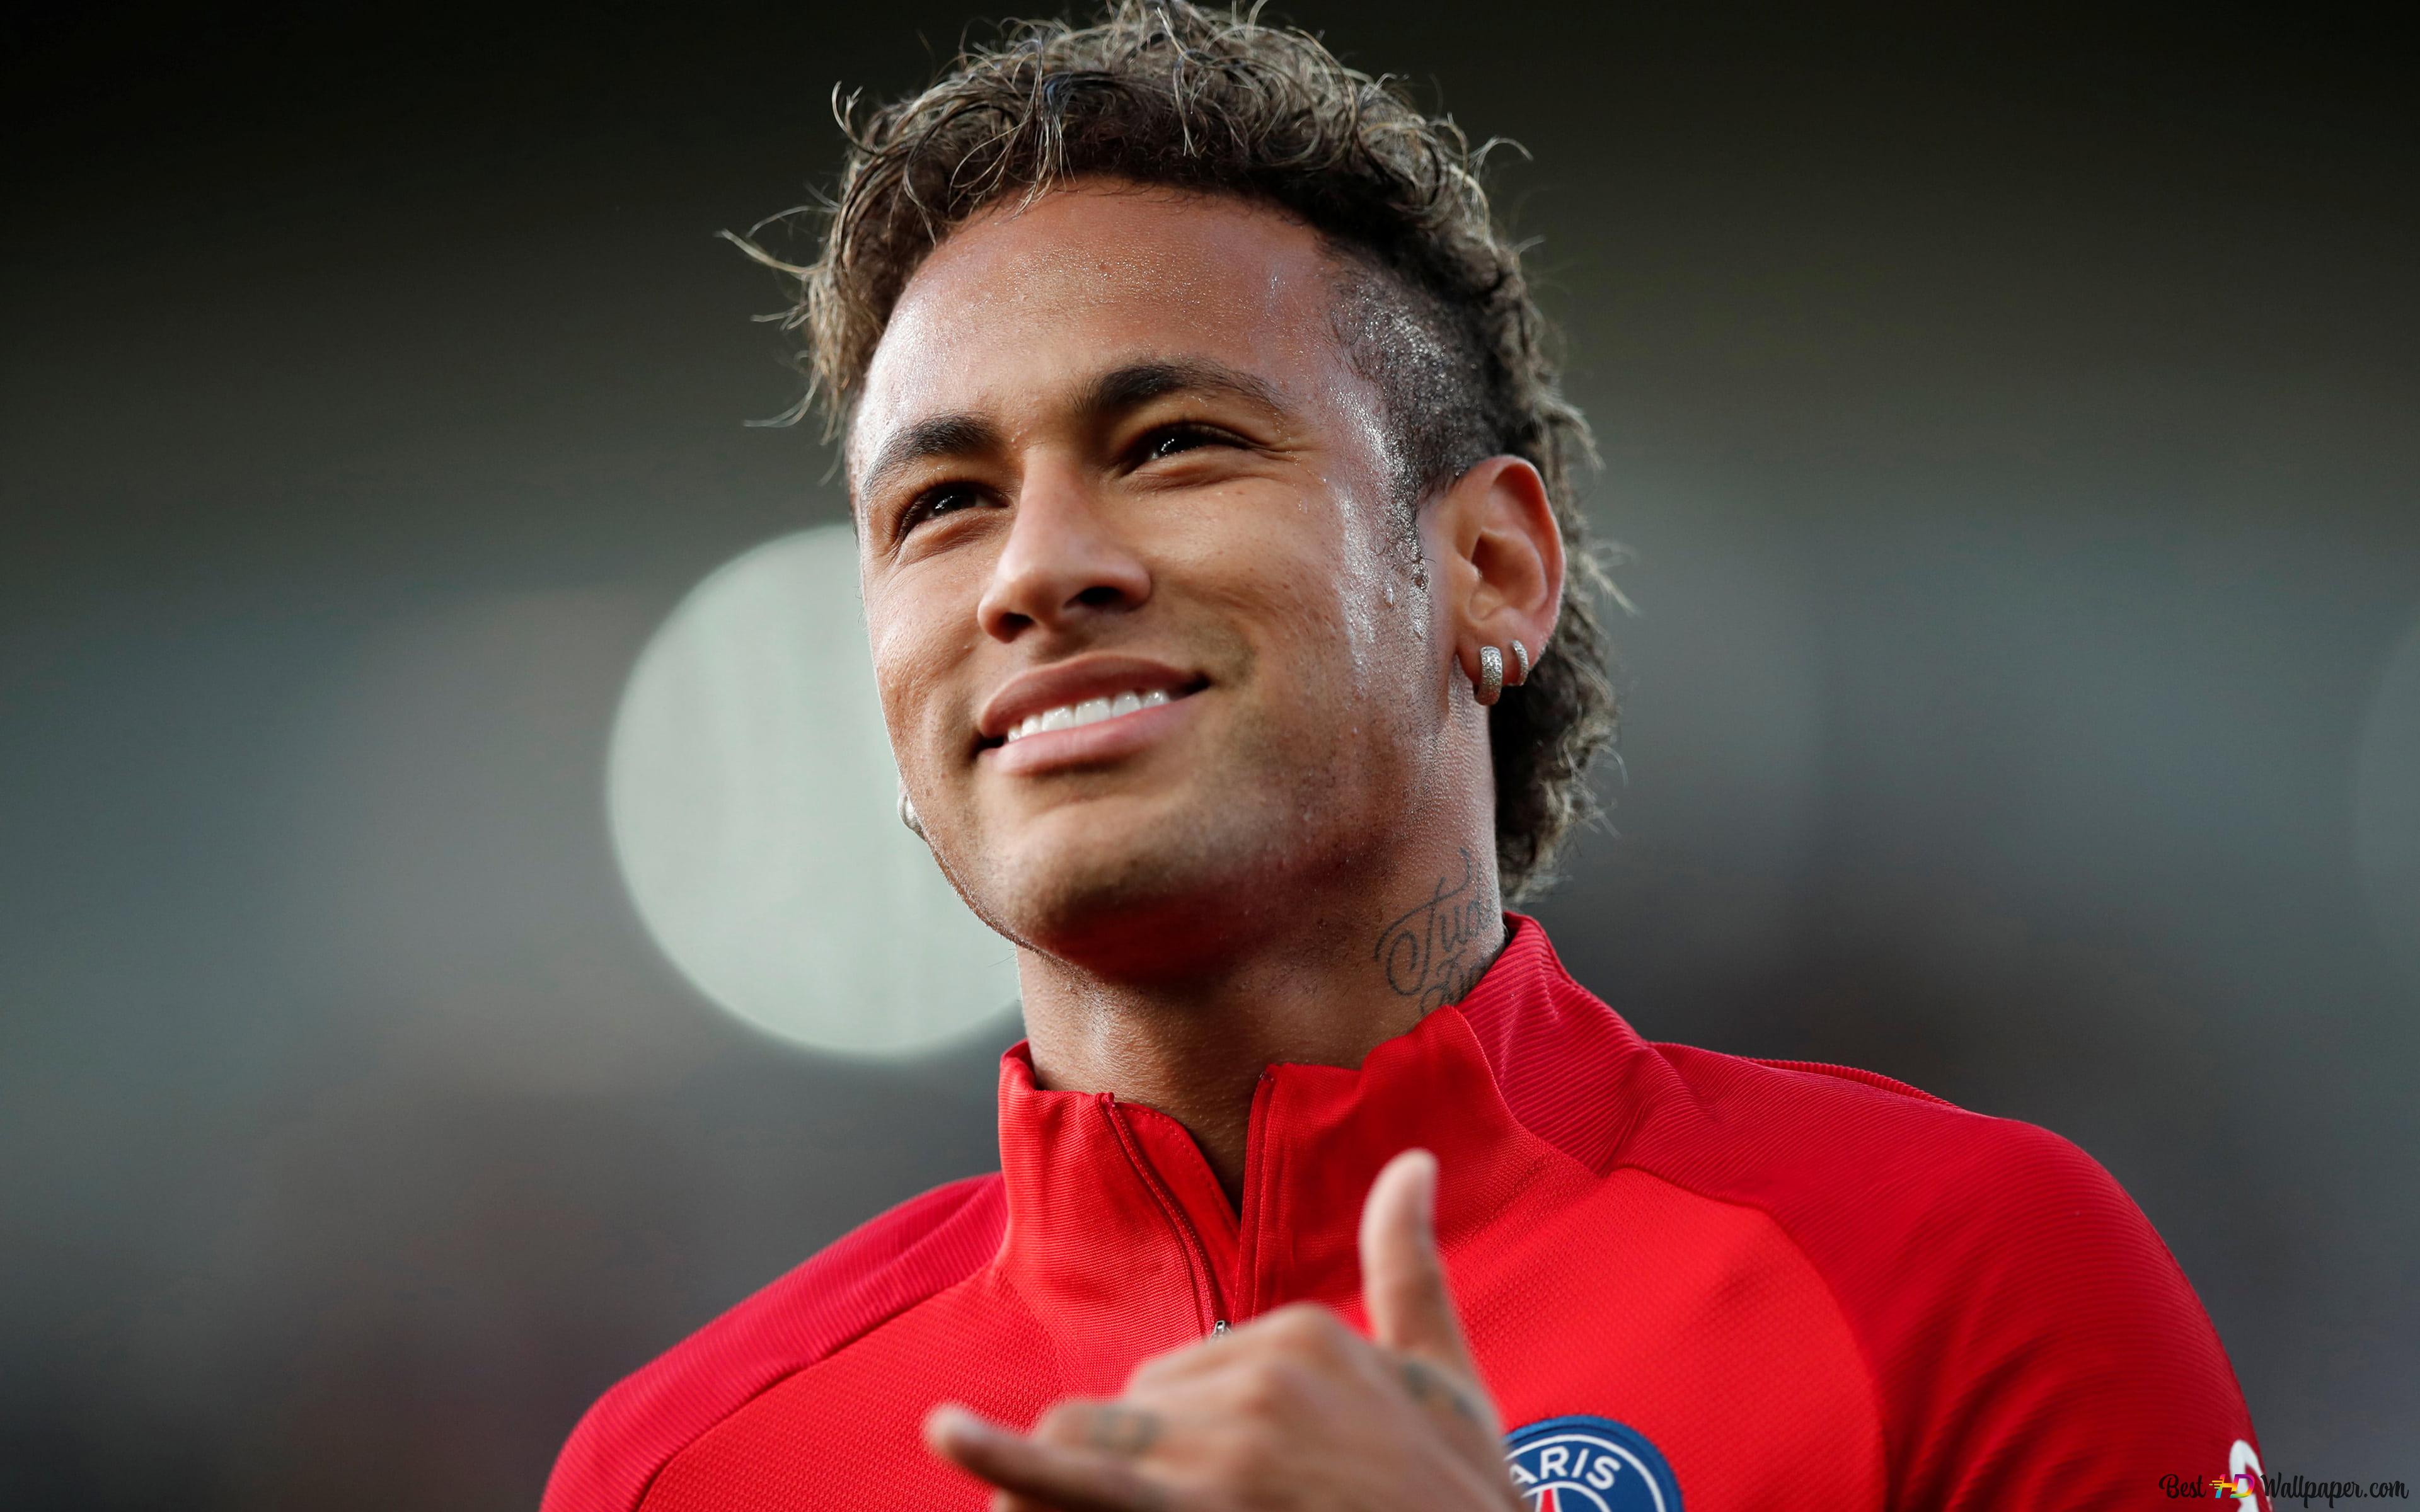 Neymar JR smiling portrait 4K wallpaper download